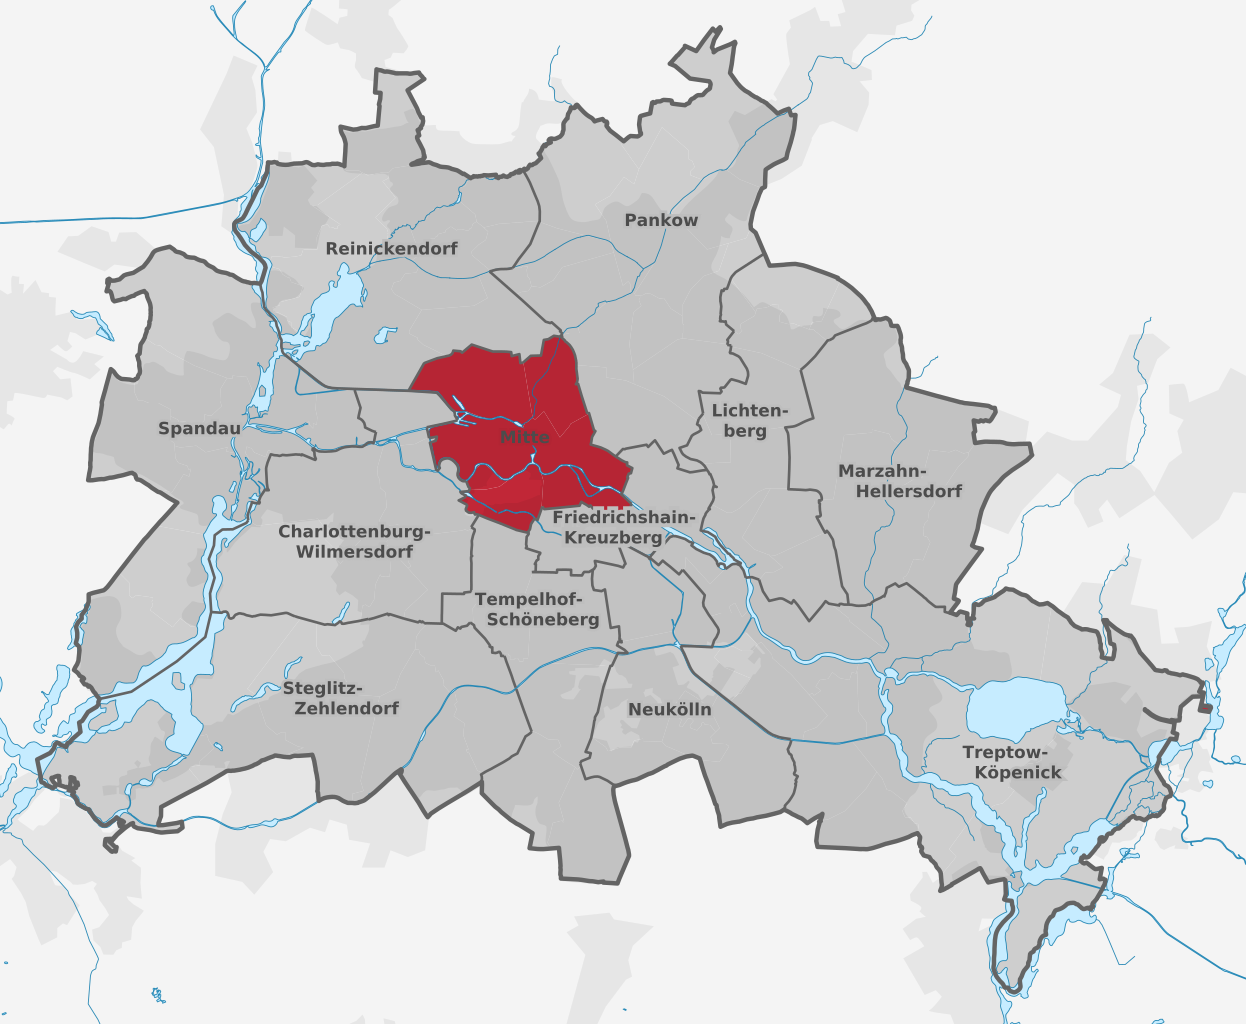 Bezirk Mitte -Quelle: https://upload.wikimedia.org/wikipedia/commons/thumb/b/b9/Berlin_Bezirk_Mitte_%28labeled%29.svg/1246px-Berlin_Bezirk_Mitte_%28labeled%29.svg.png